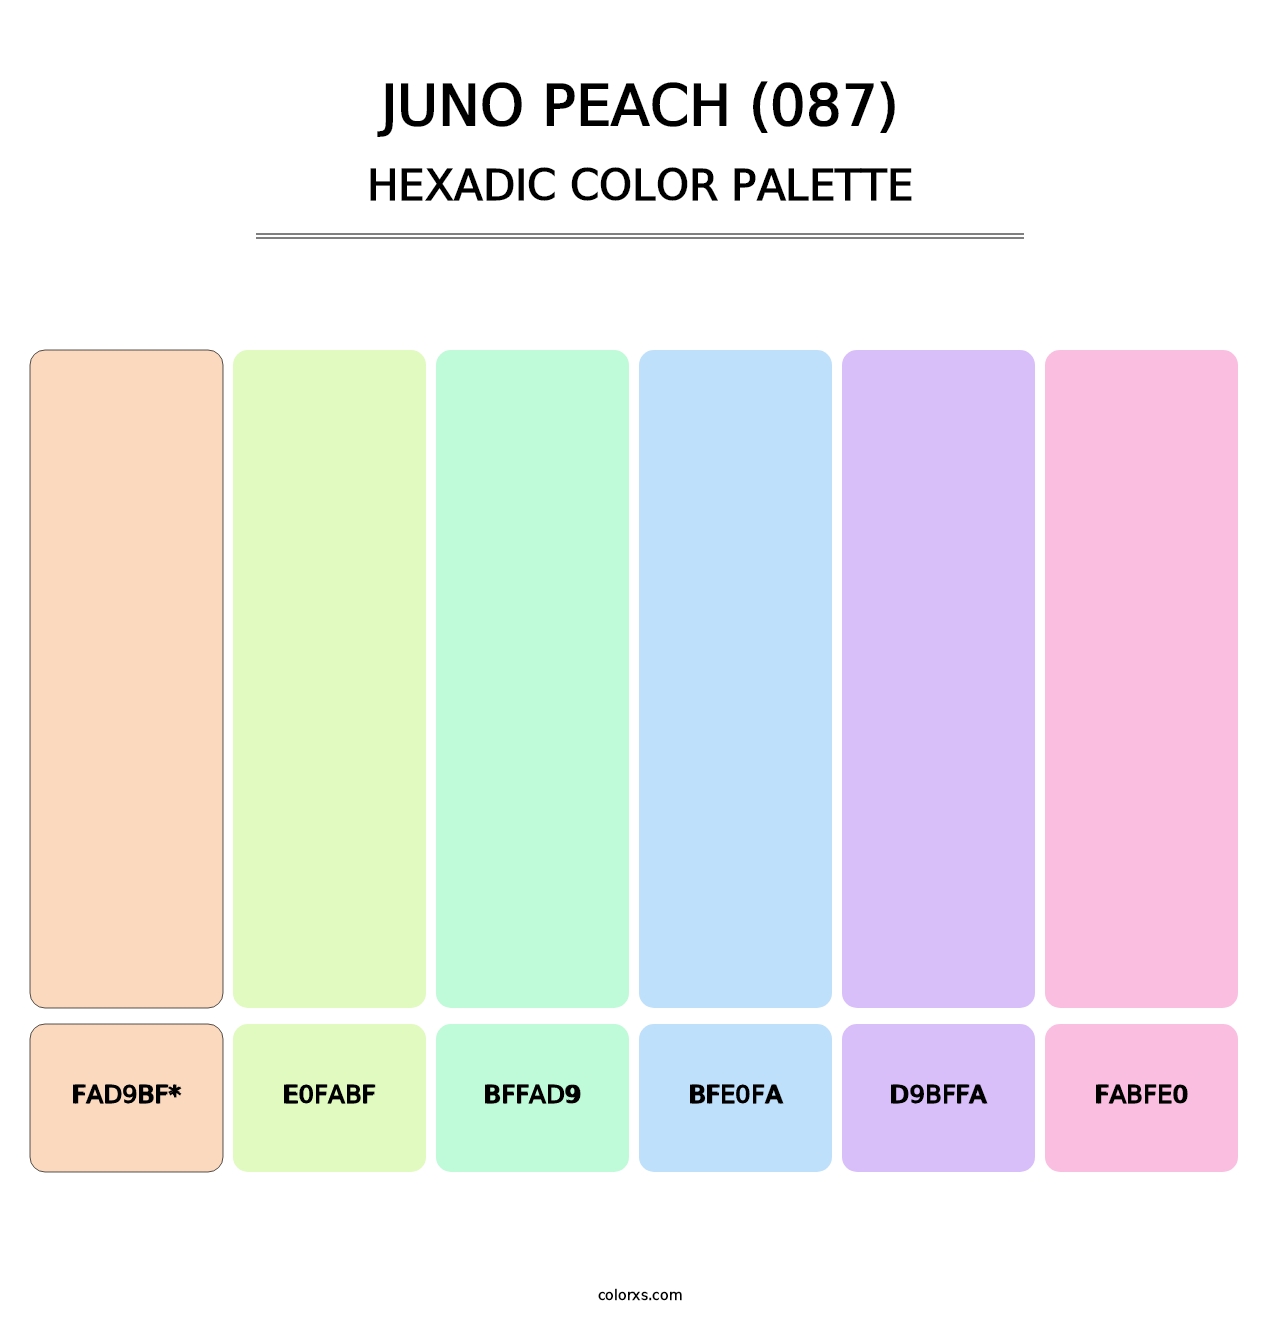 Juno Peach (087) - Hexadic Color Palette